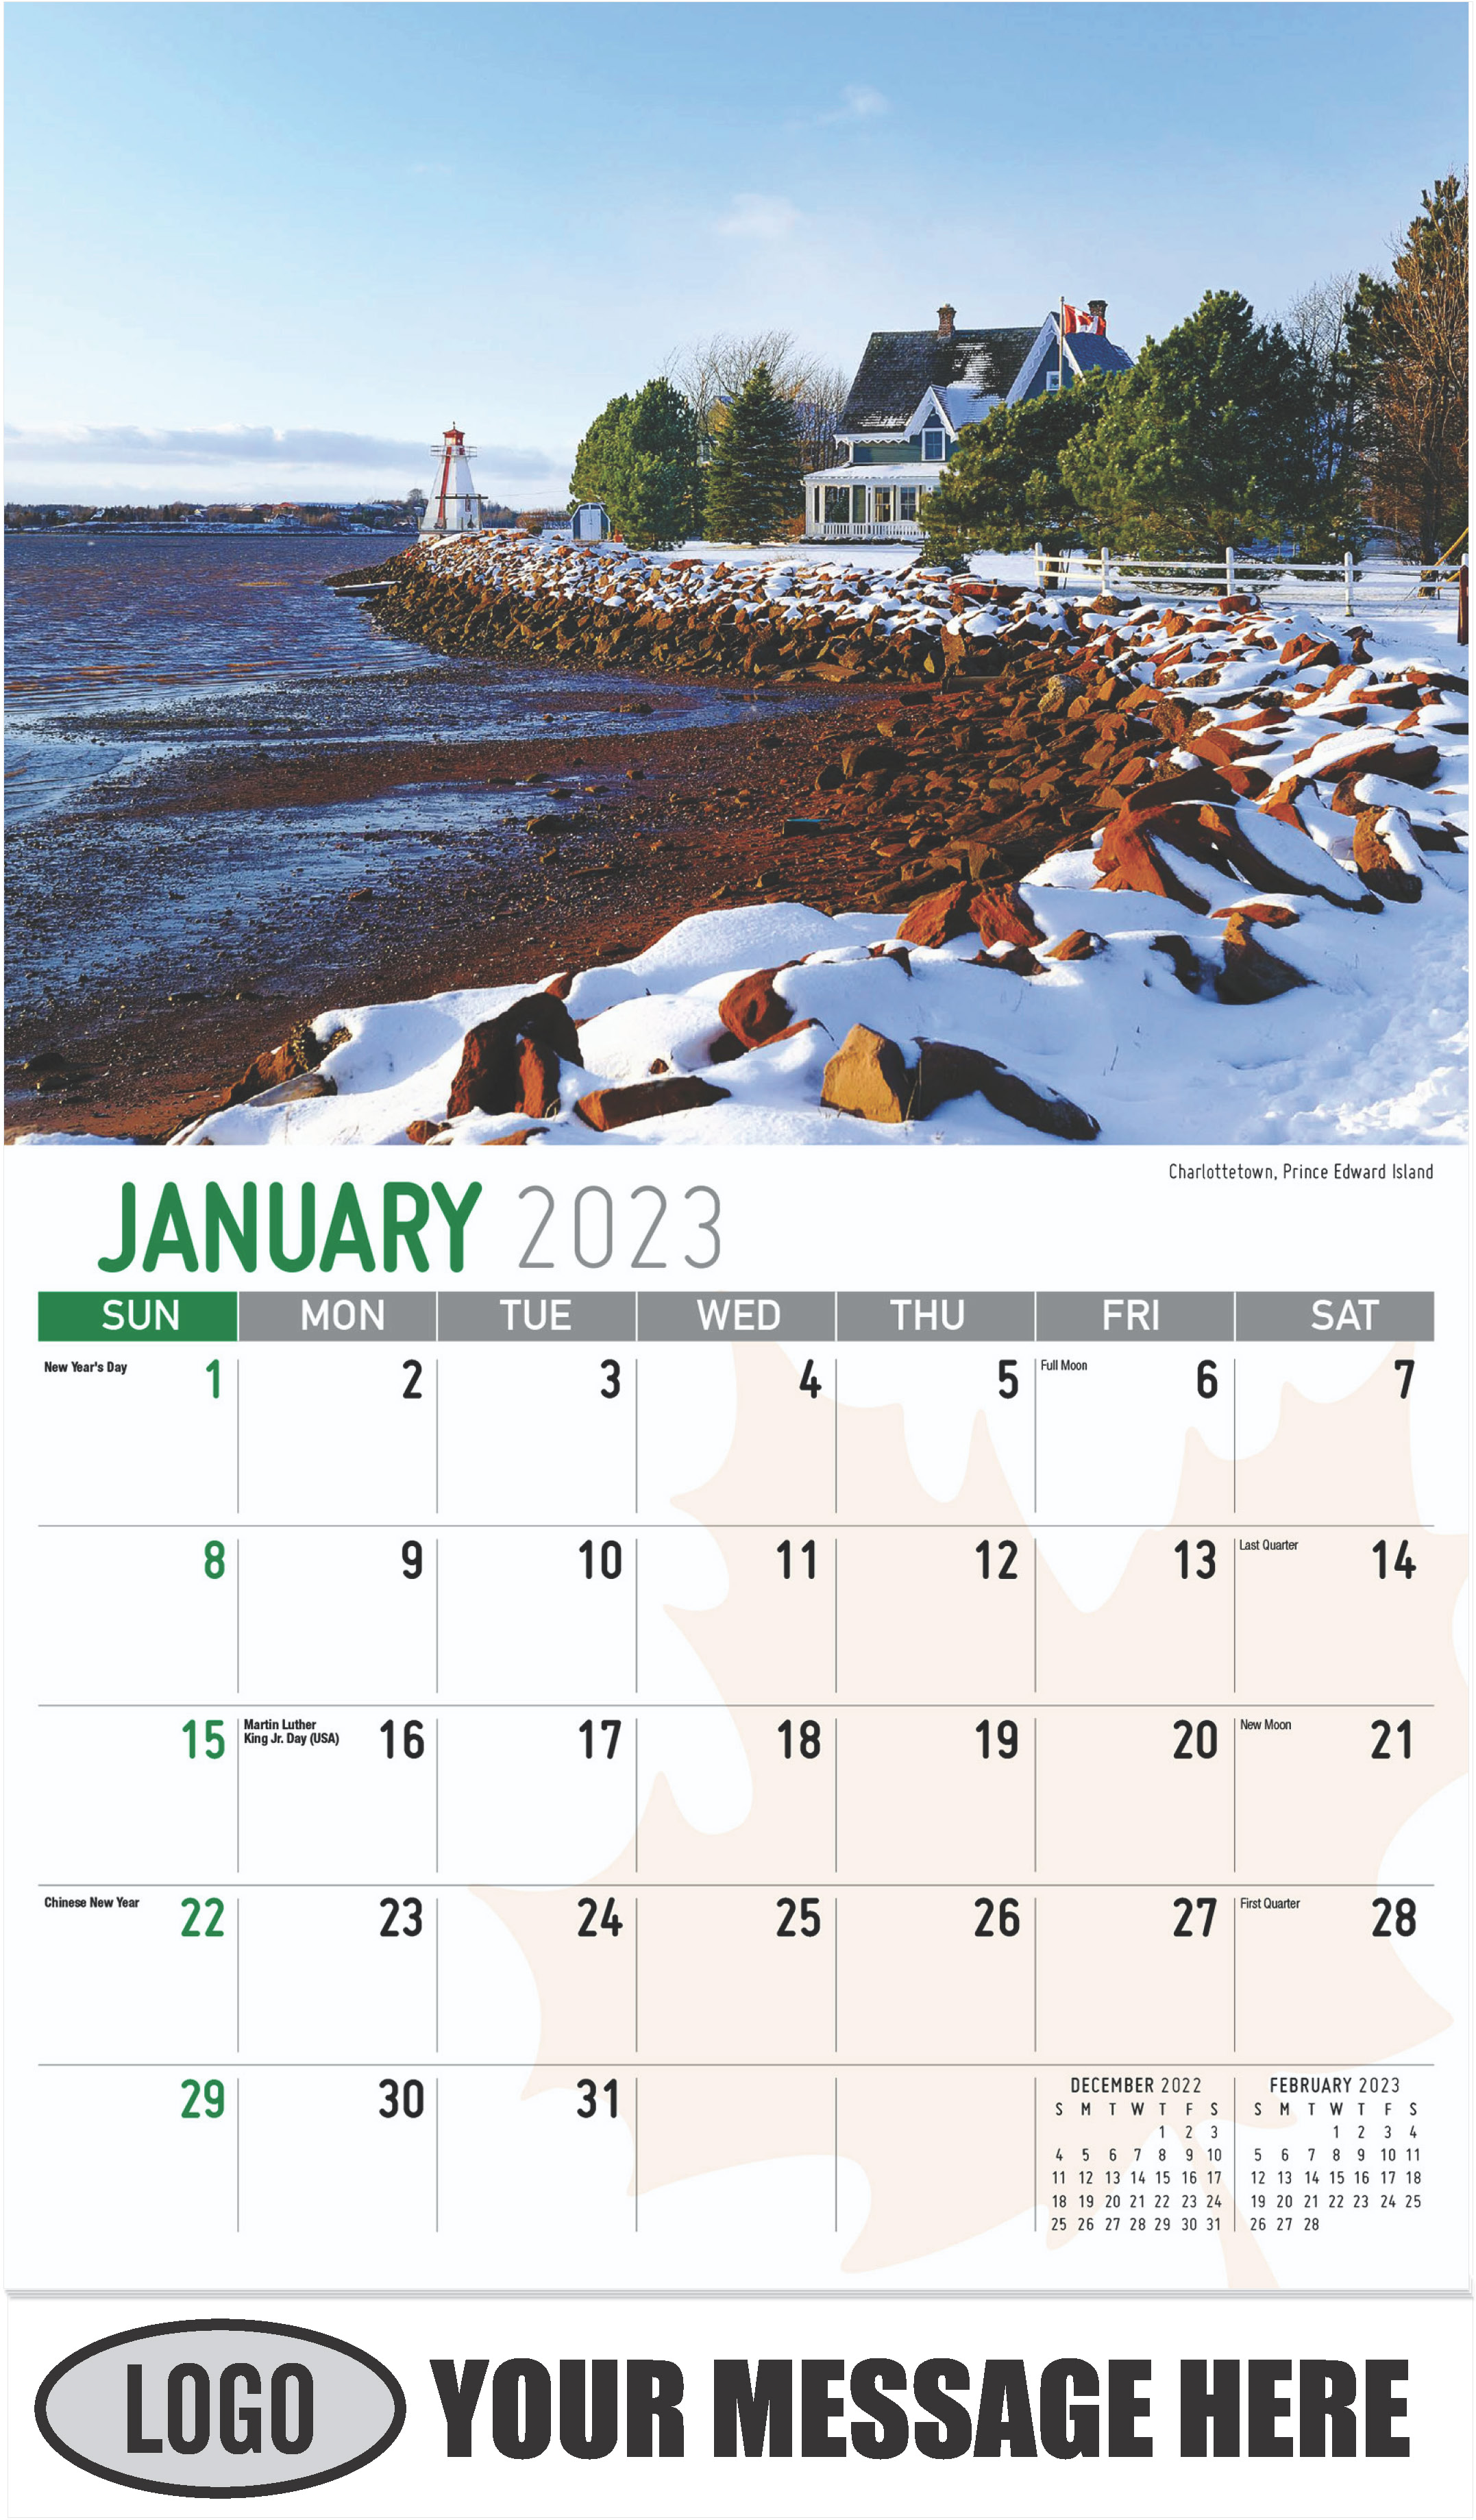 Charlottetown, Prince Edward Island - January - Scenes of Canada 2023 Promotional Calendar